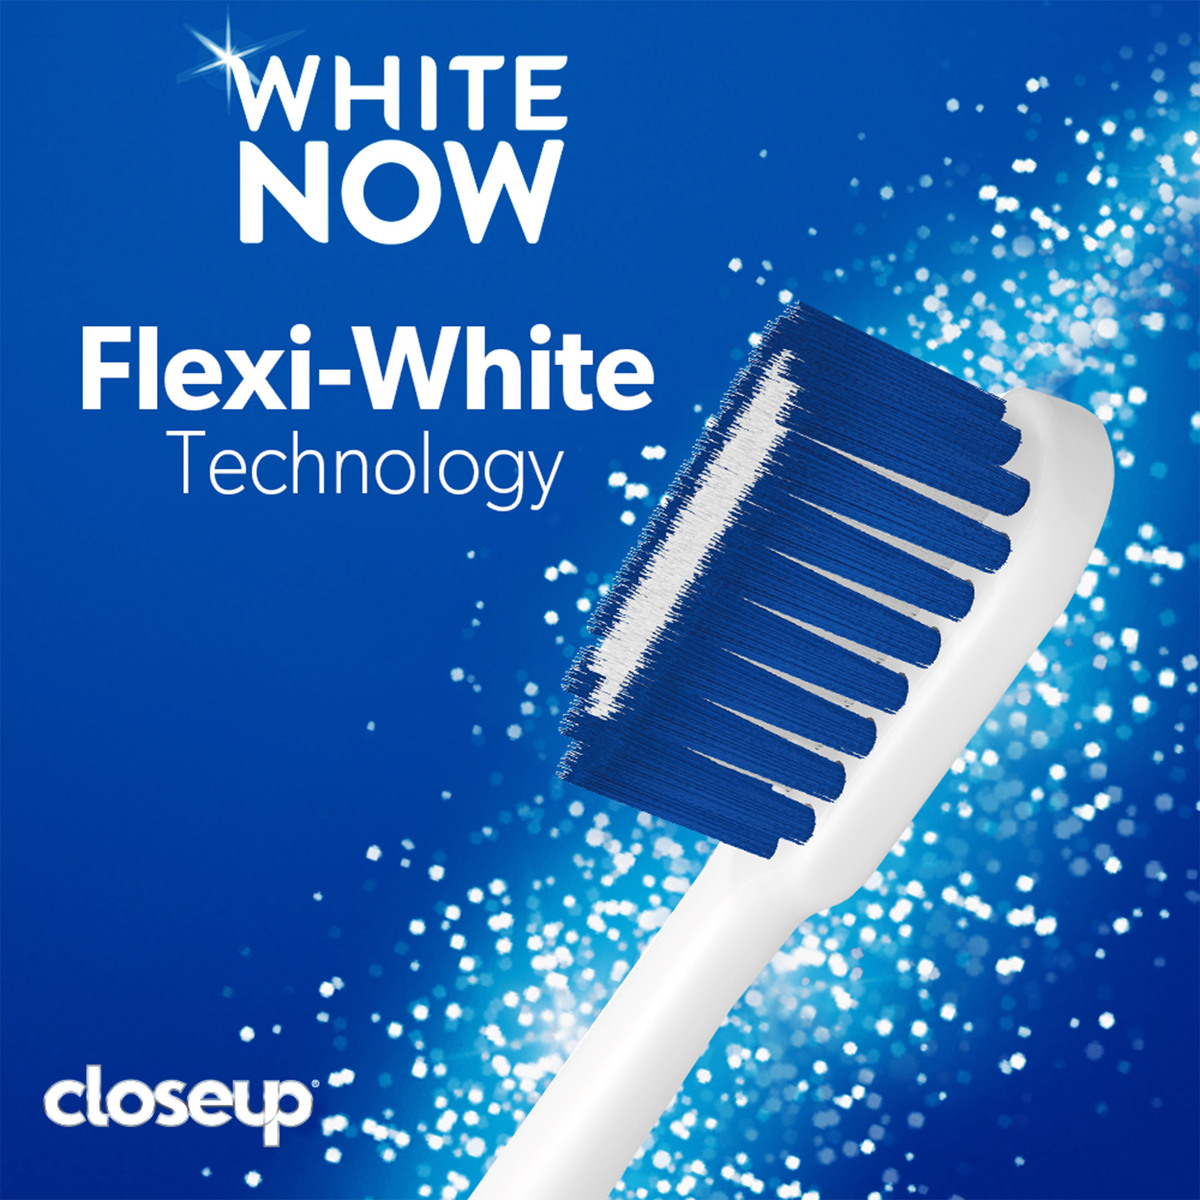 Closeup Toothbrush White Now + Protect Medium 1 pc